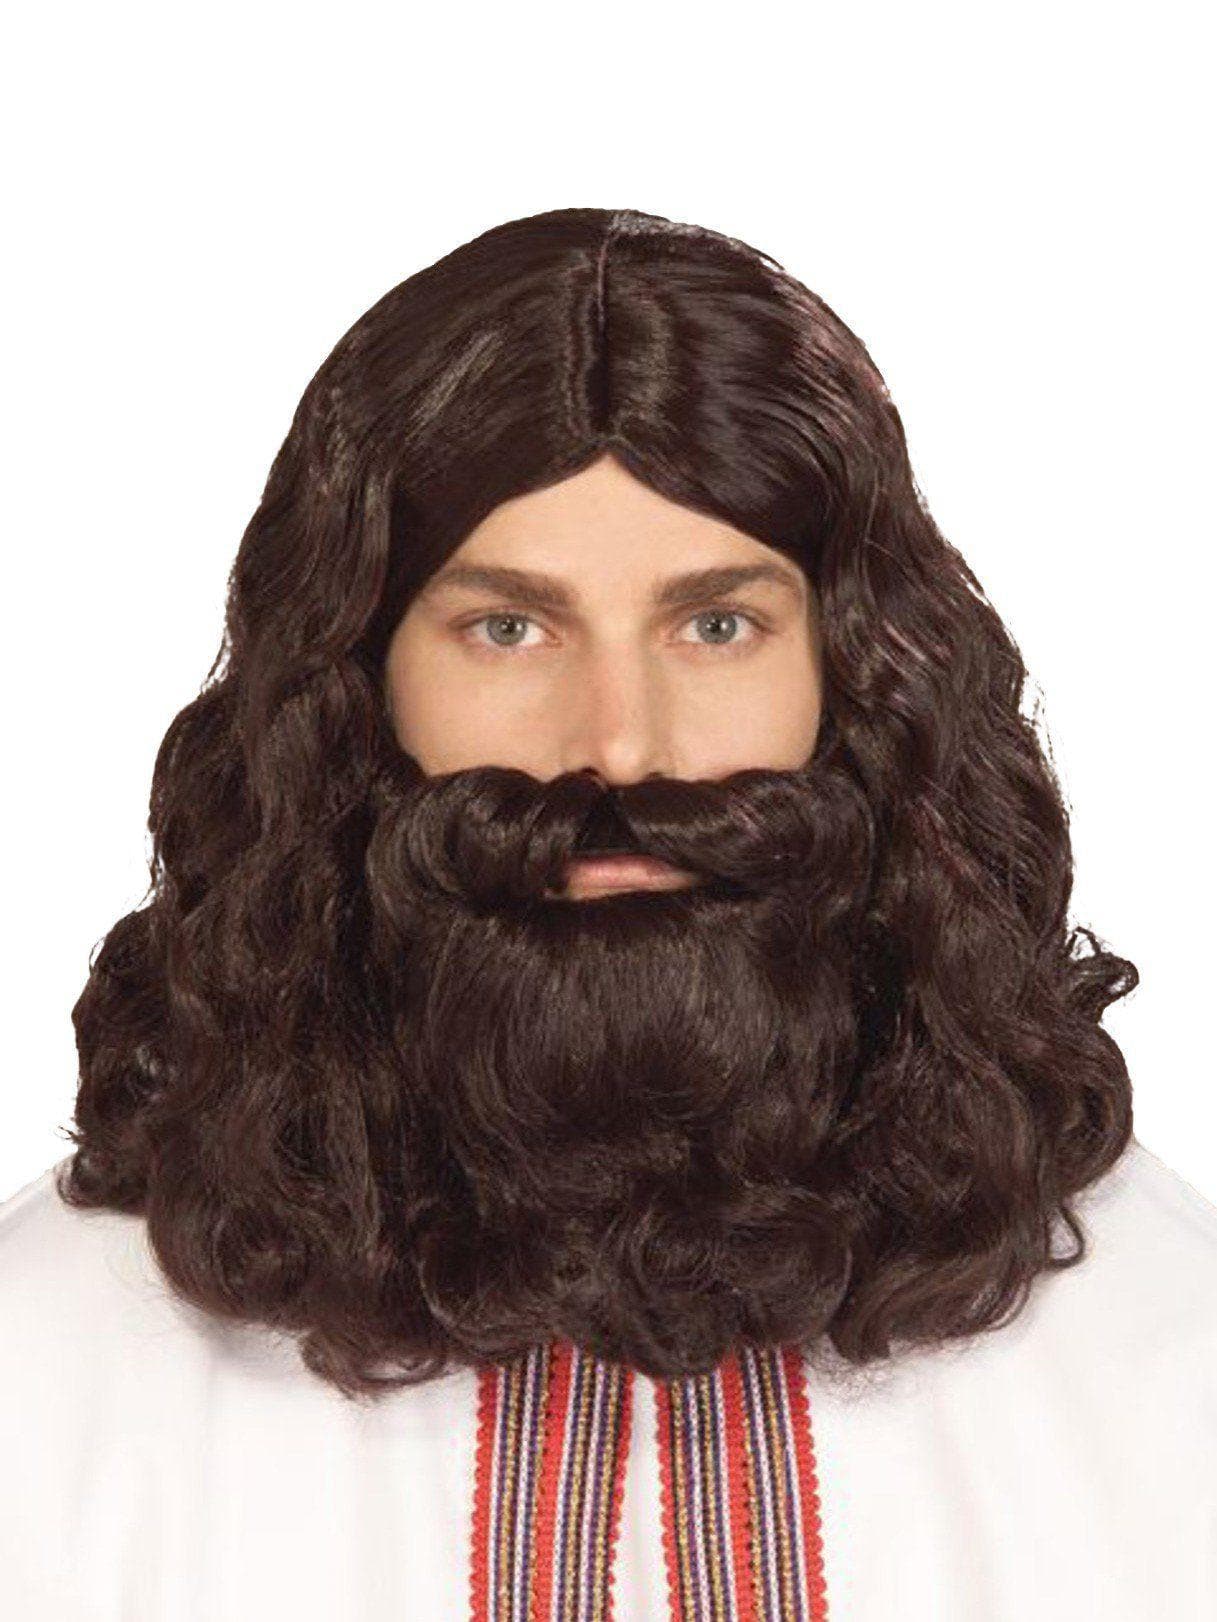 Men's Long Brown Biblical Wig and Beard Set - costumes.com